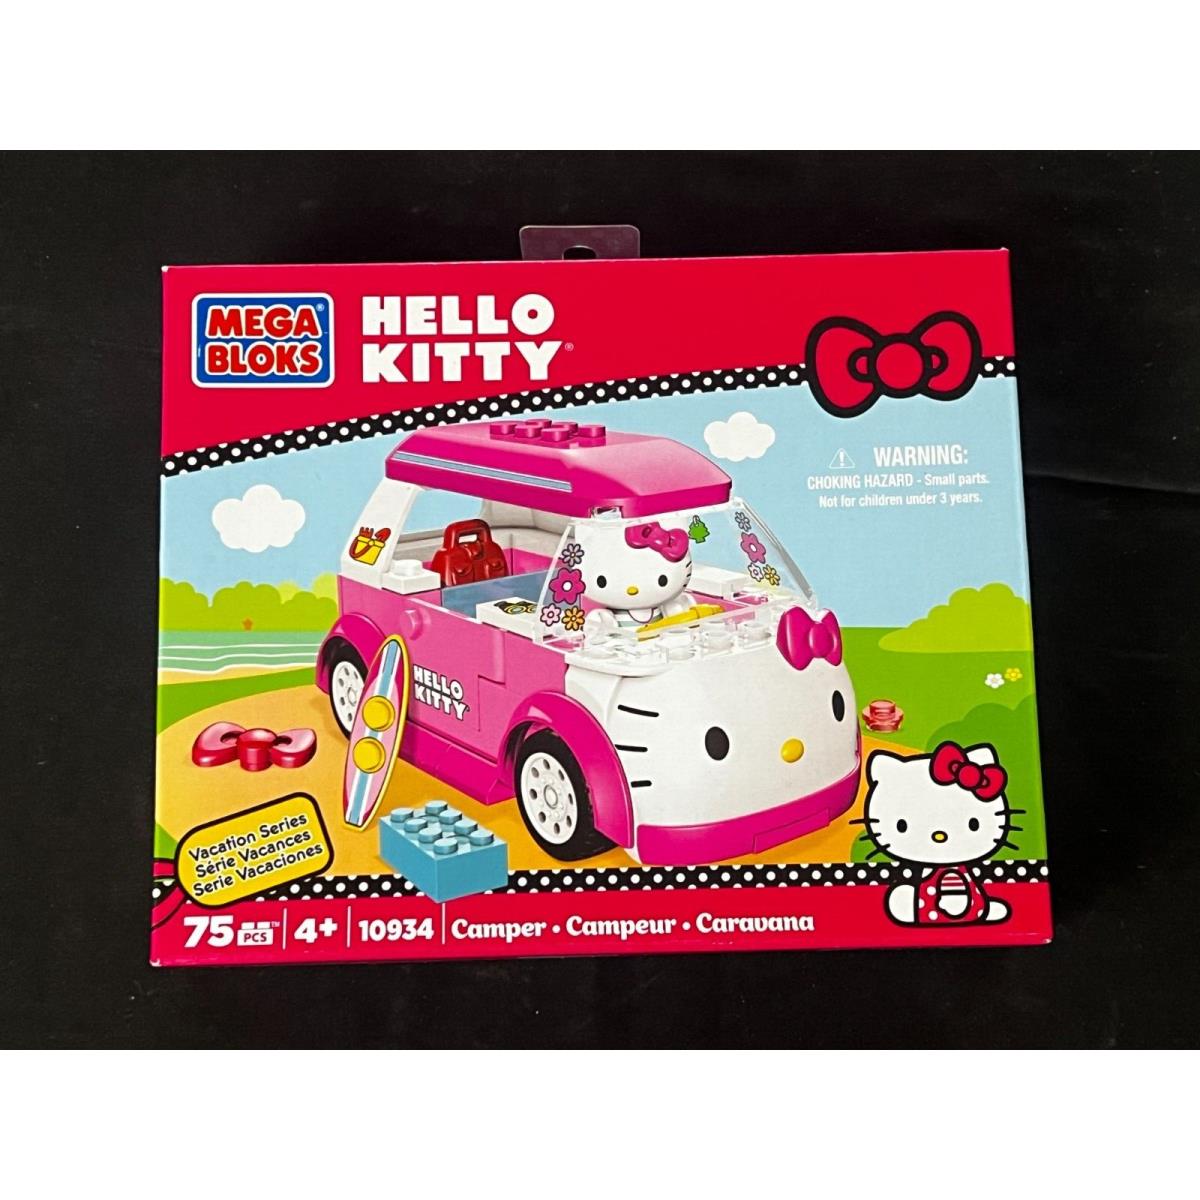 Mega Bloks 10934 2013 Hello Kitty Sanrio Exclusive Vacation Series Camper